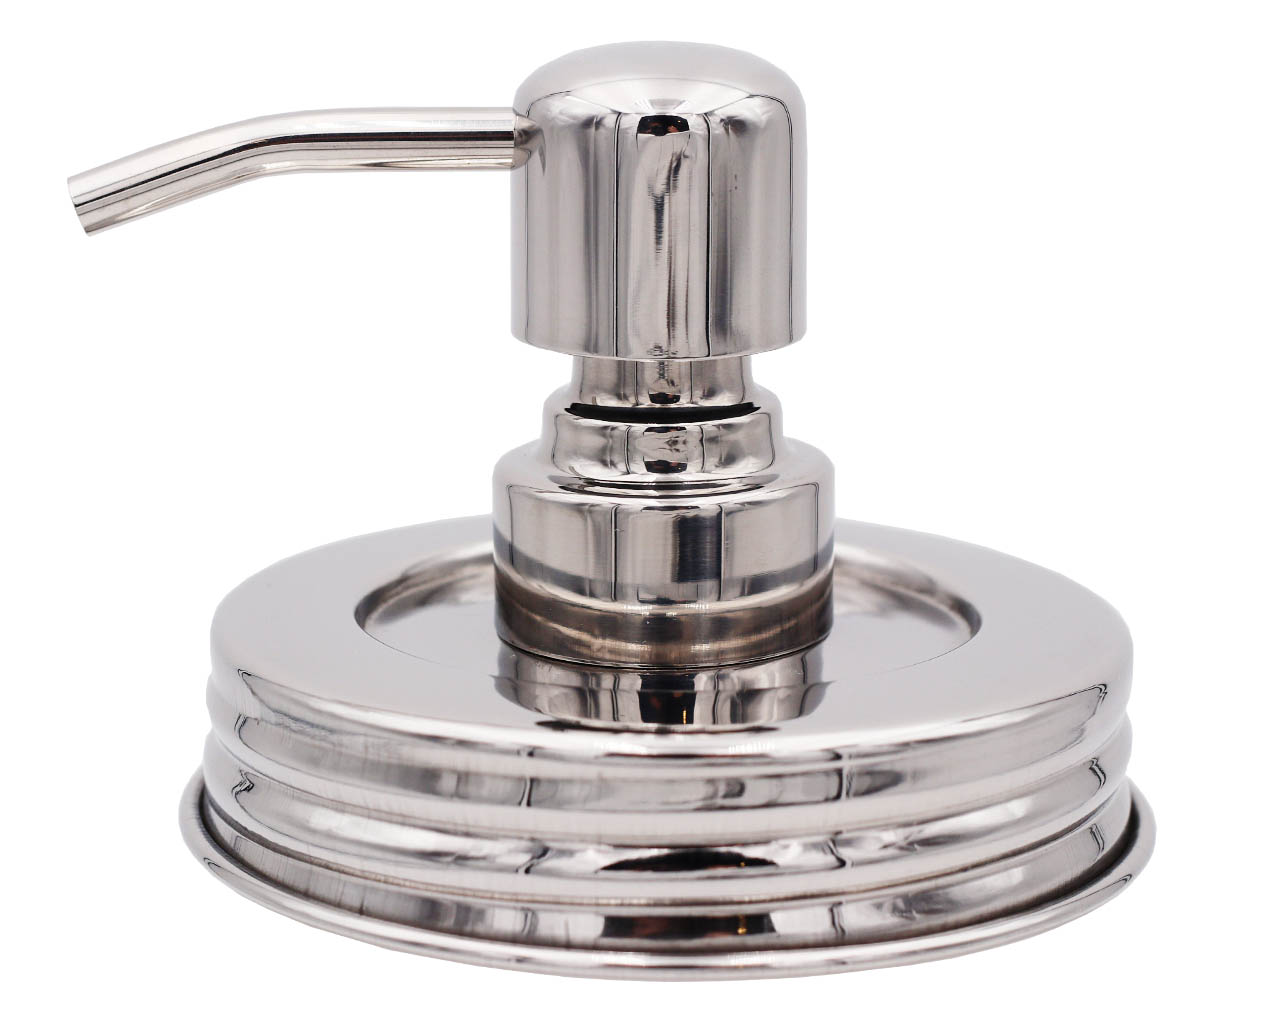 Mirror / Chrome Soap Pump Dispensers for Mason Jars